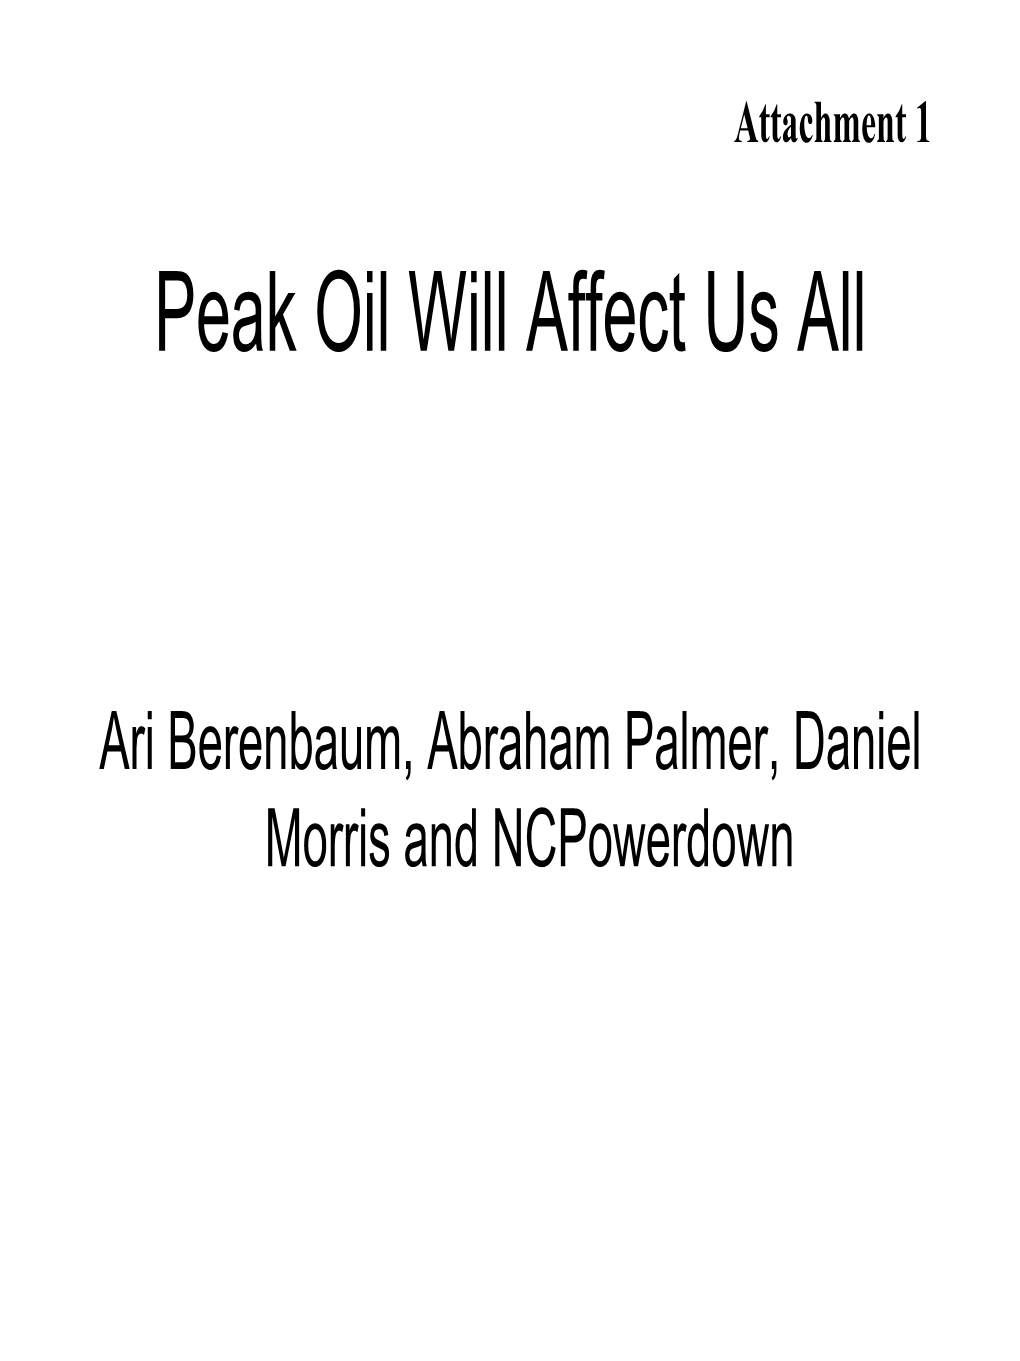 Peak Oil Will Affect Us All